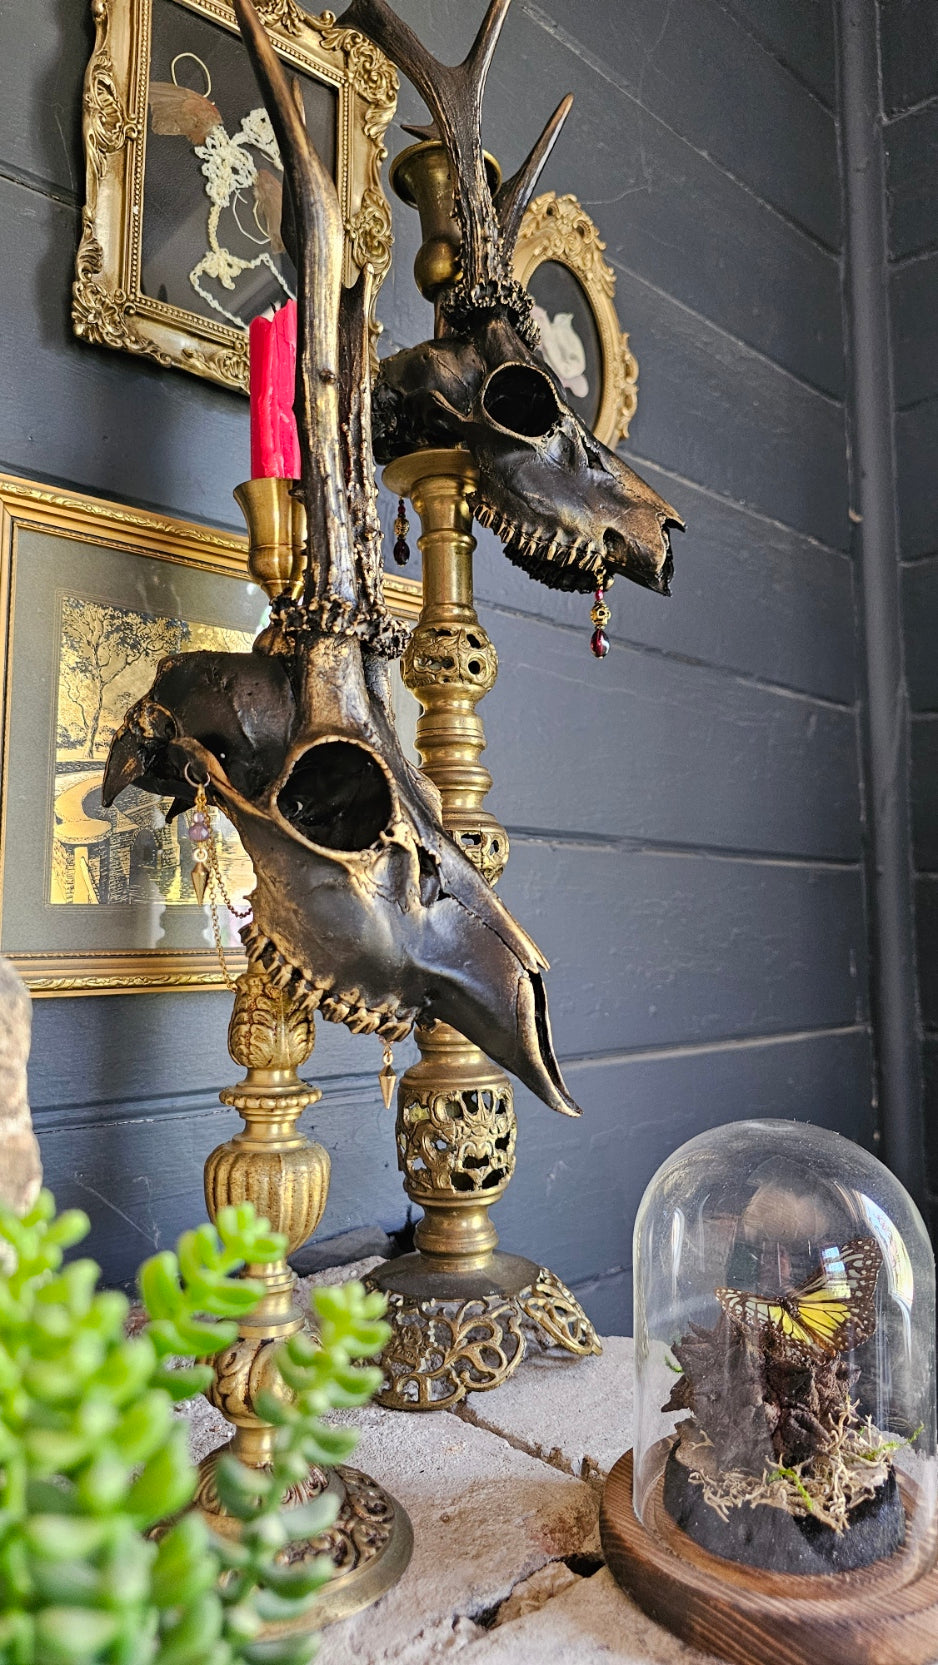 Roe deer skull on brass candle holder (65cm)